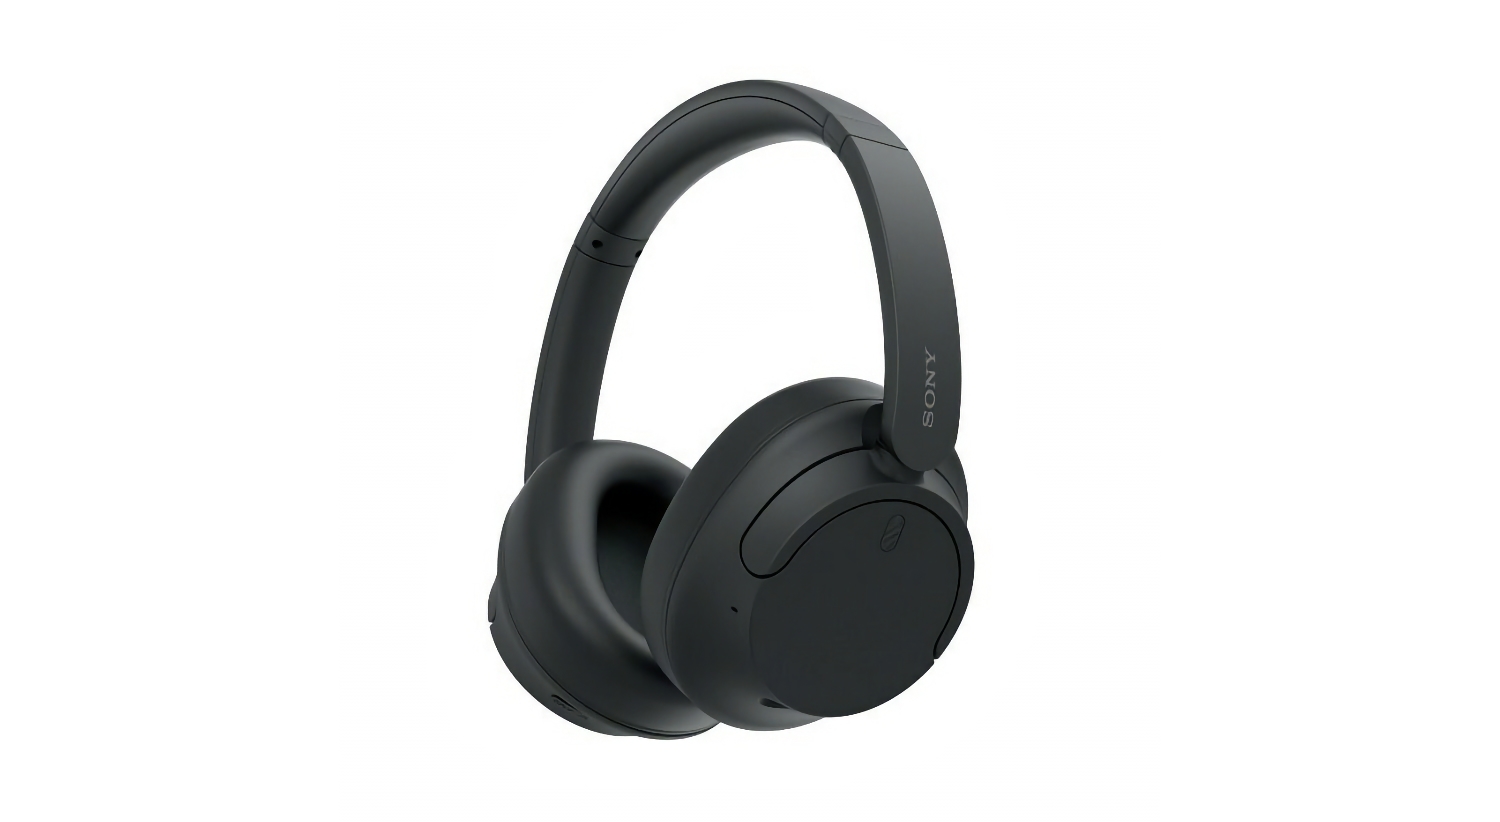 Sony's new mid-range headphones borrow the premium V1 chip from the WH-1000XM5